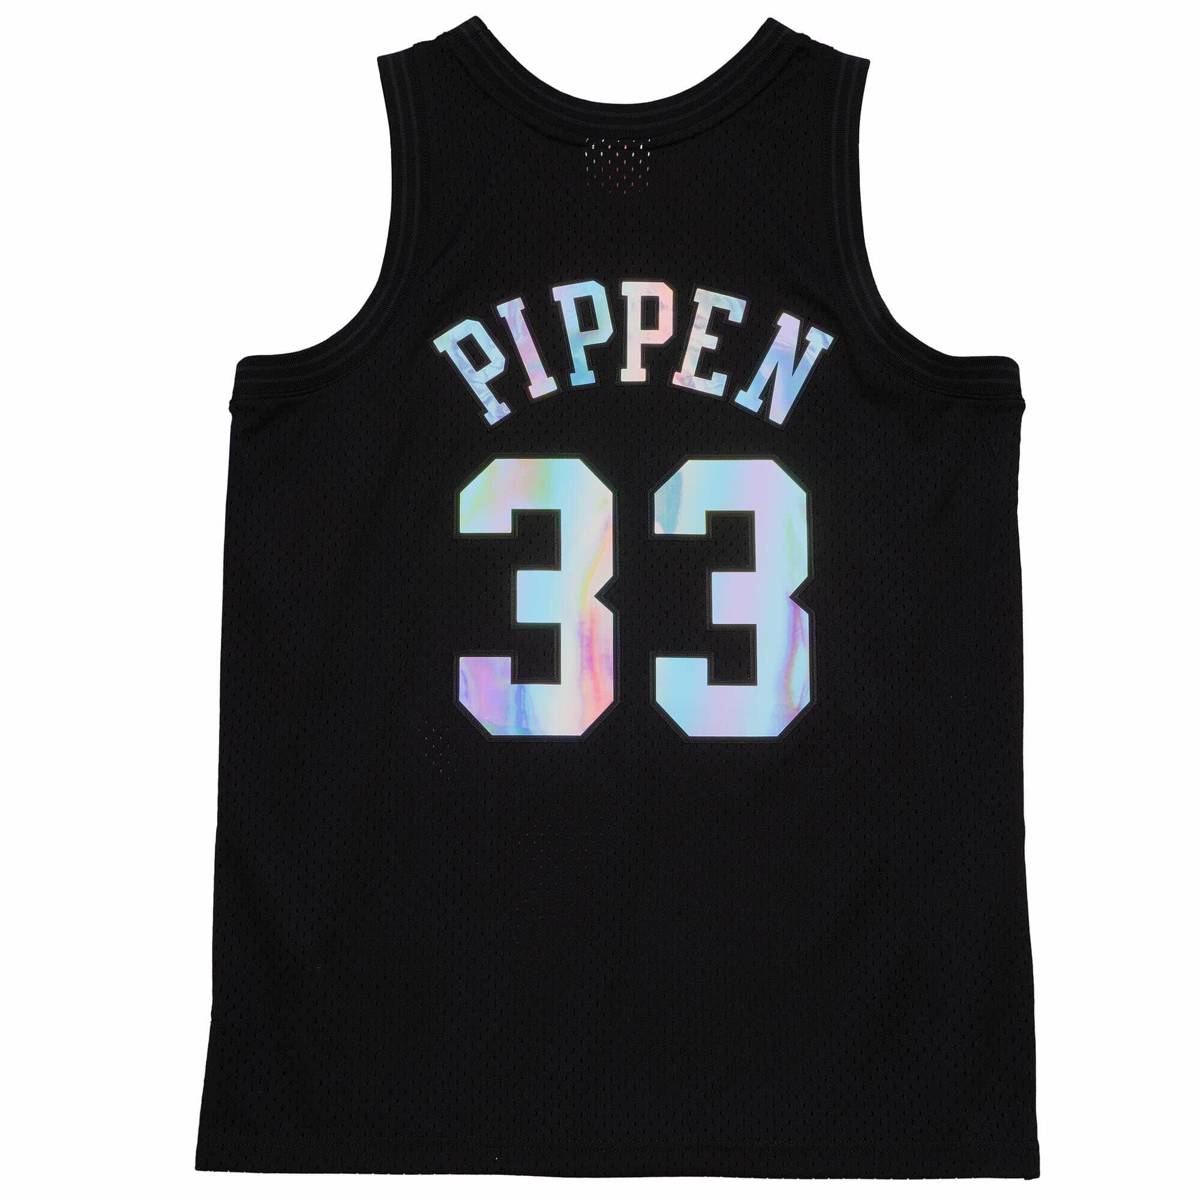 Scottie Pippen Portland Trail Blazers HWC Throwback NBA Swingman